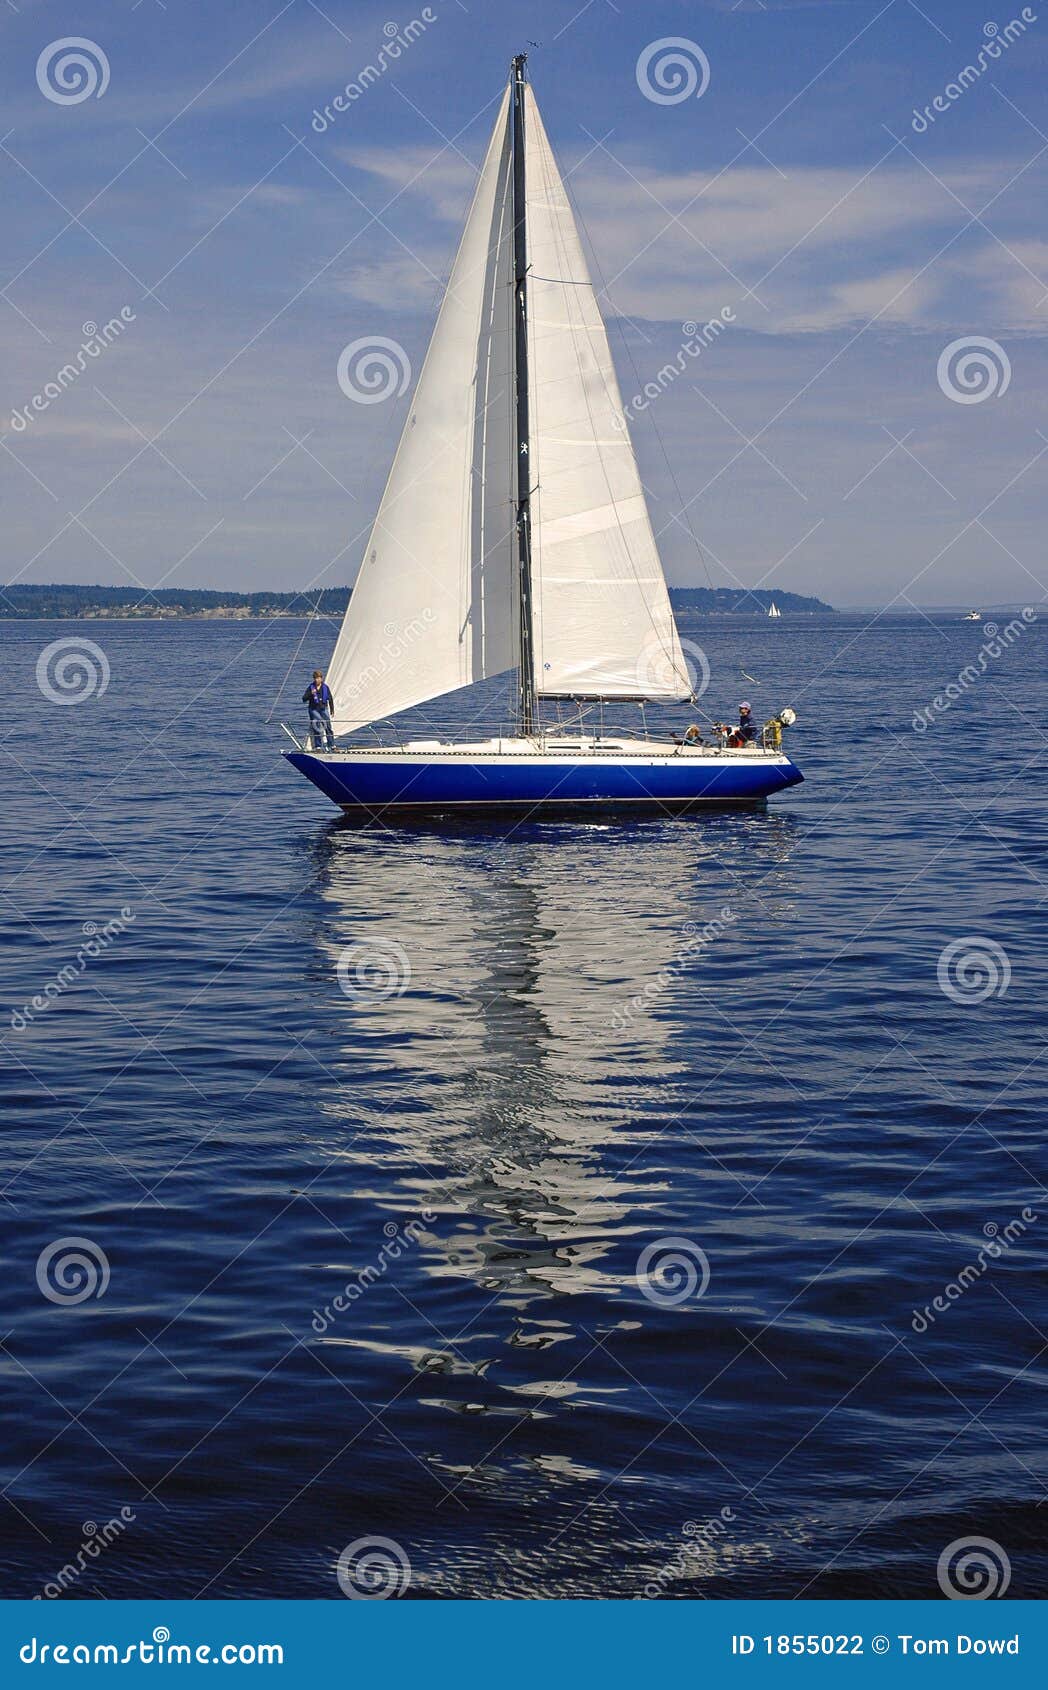 sailboat reflection stock photography - image: 1855022